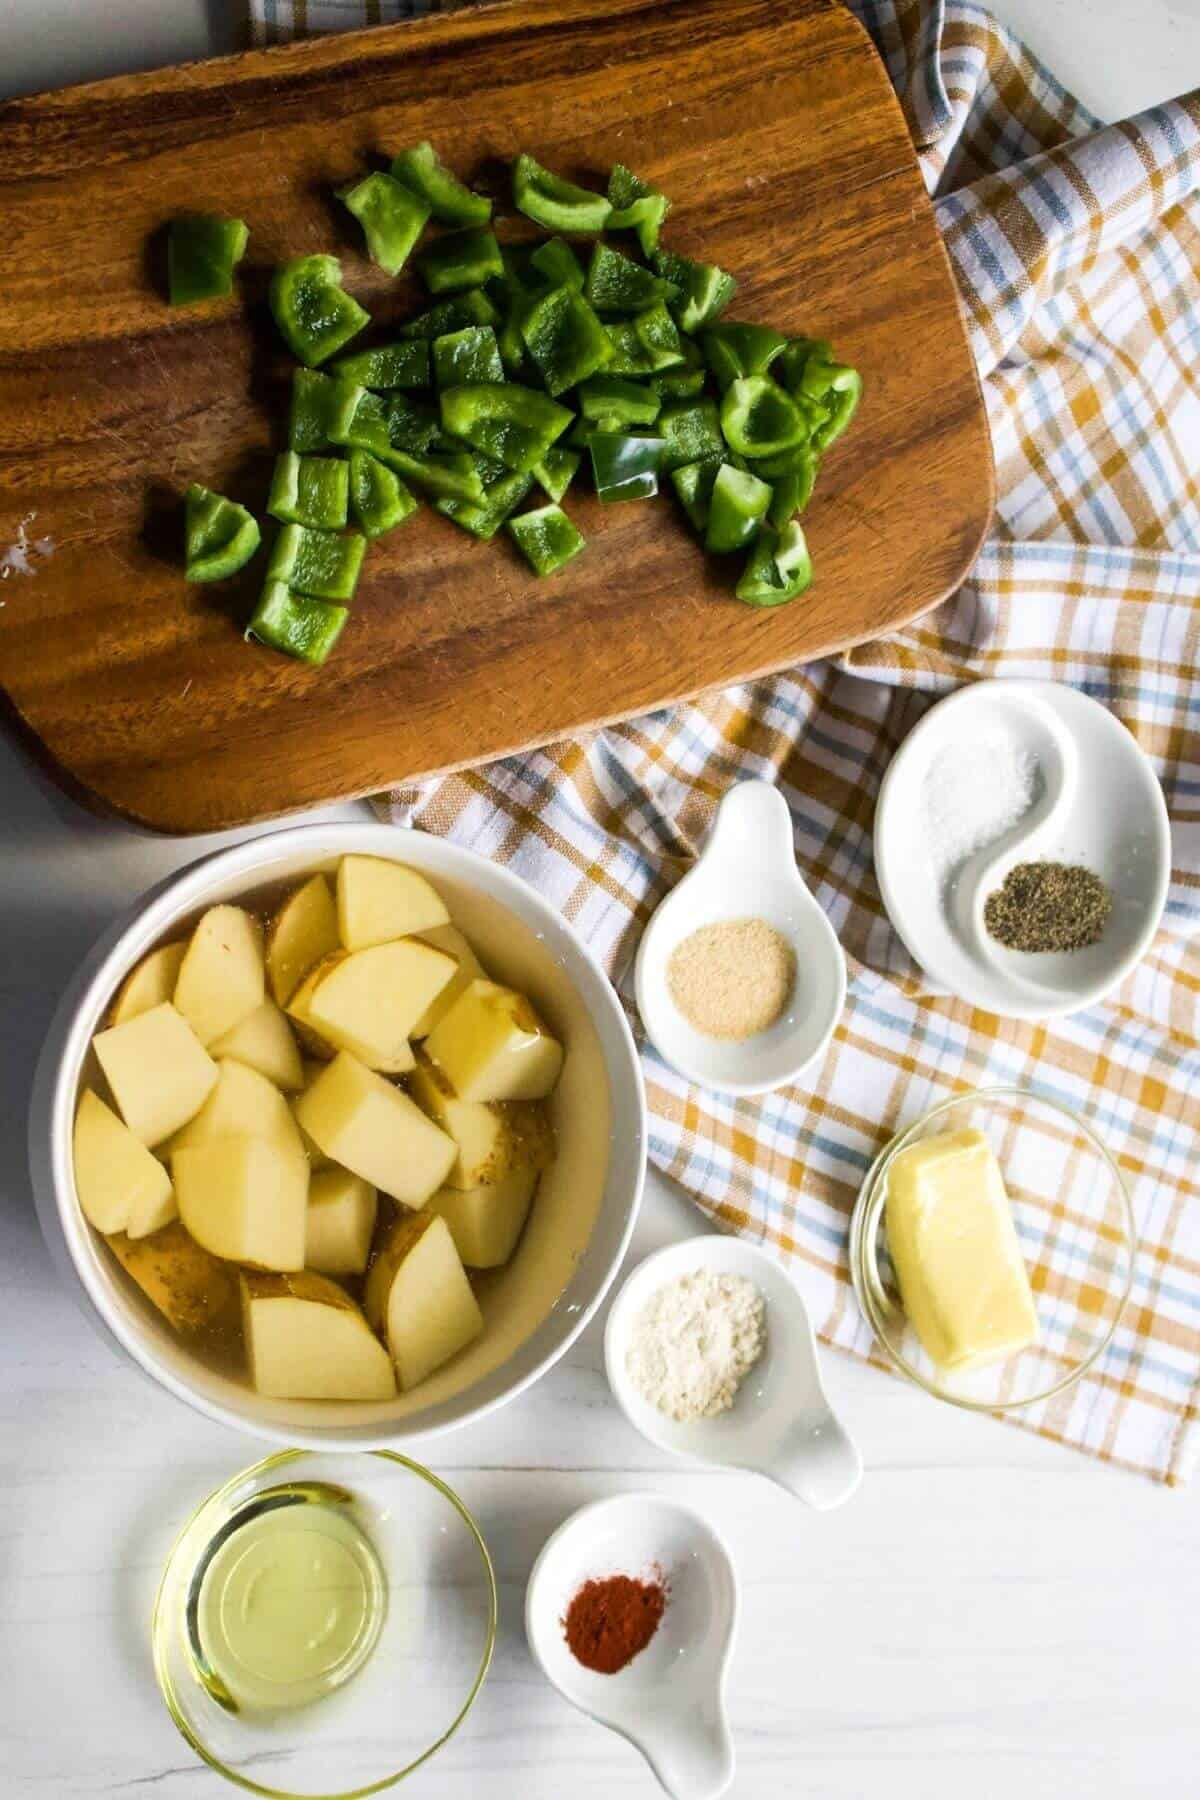 Prepared ingredients for air-fried potatoes.